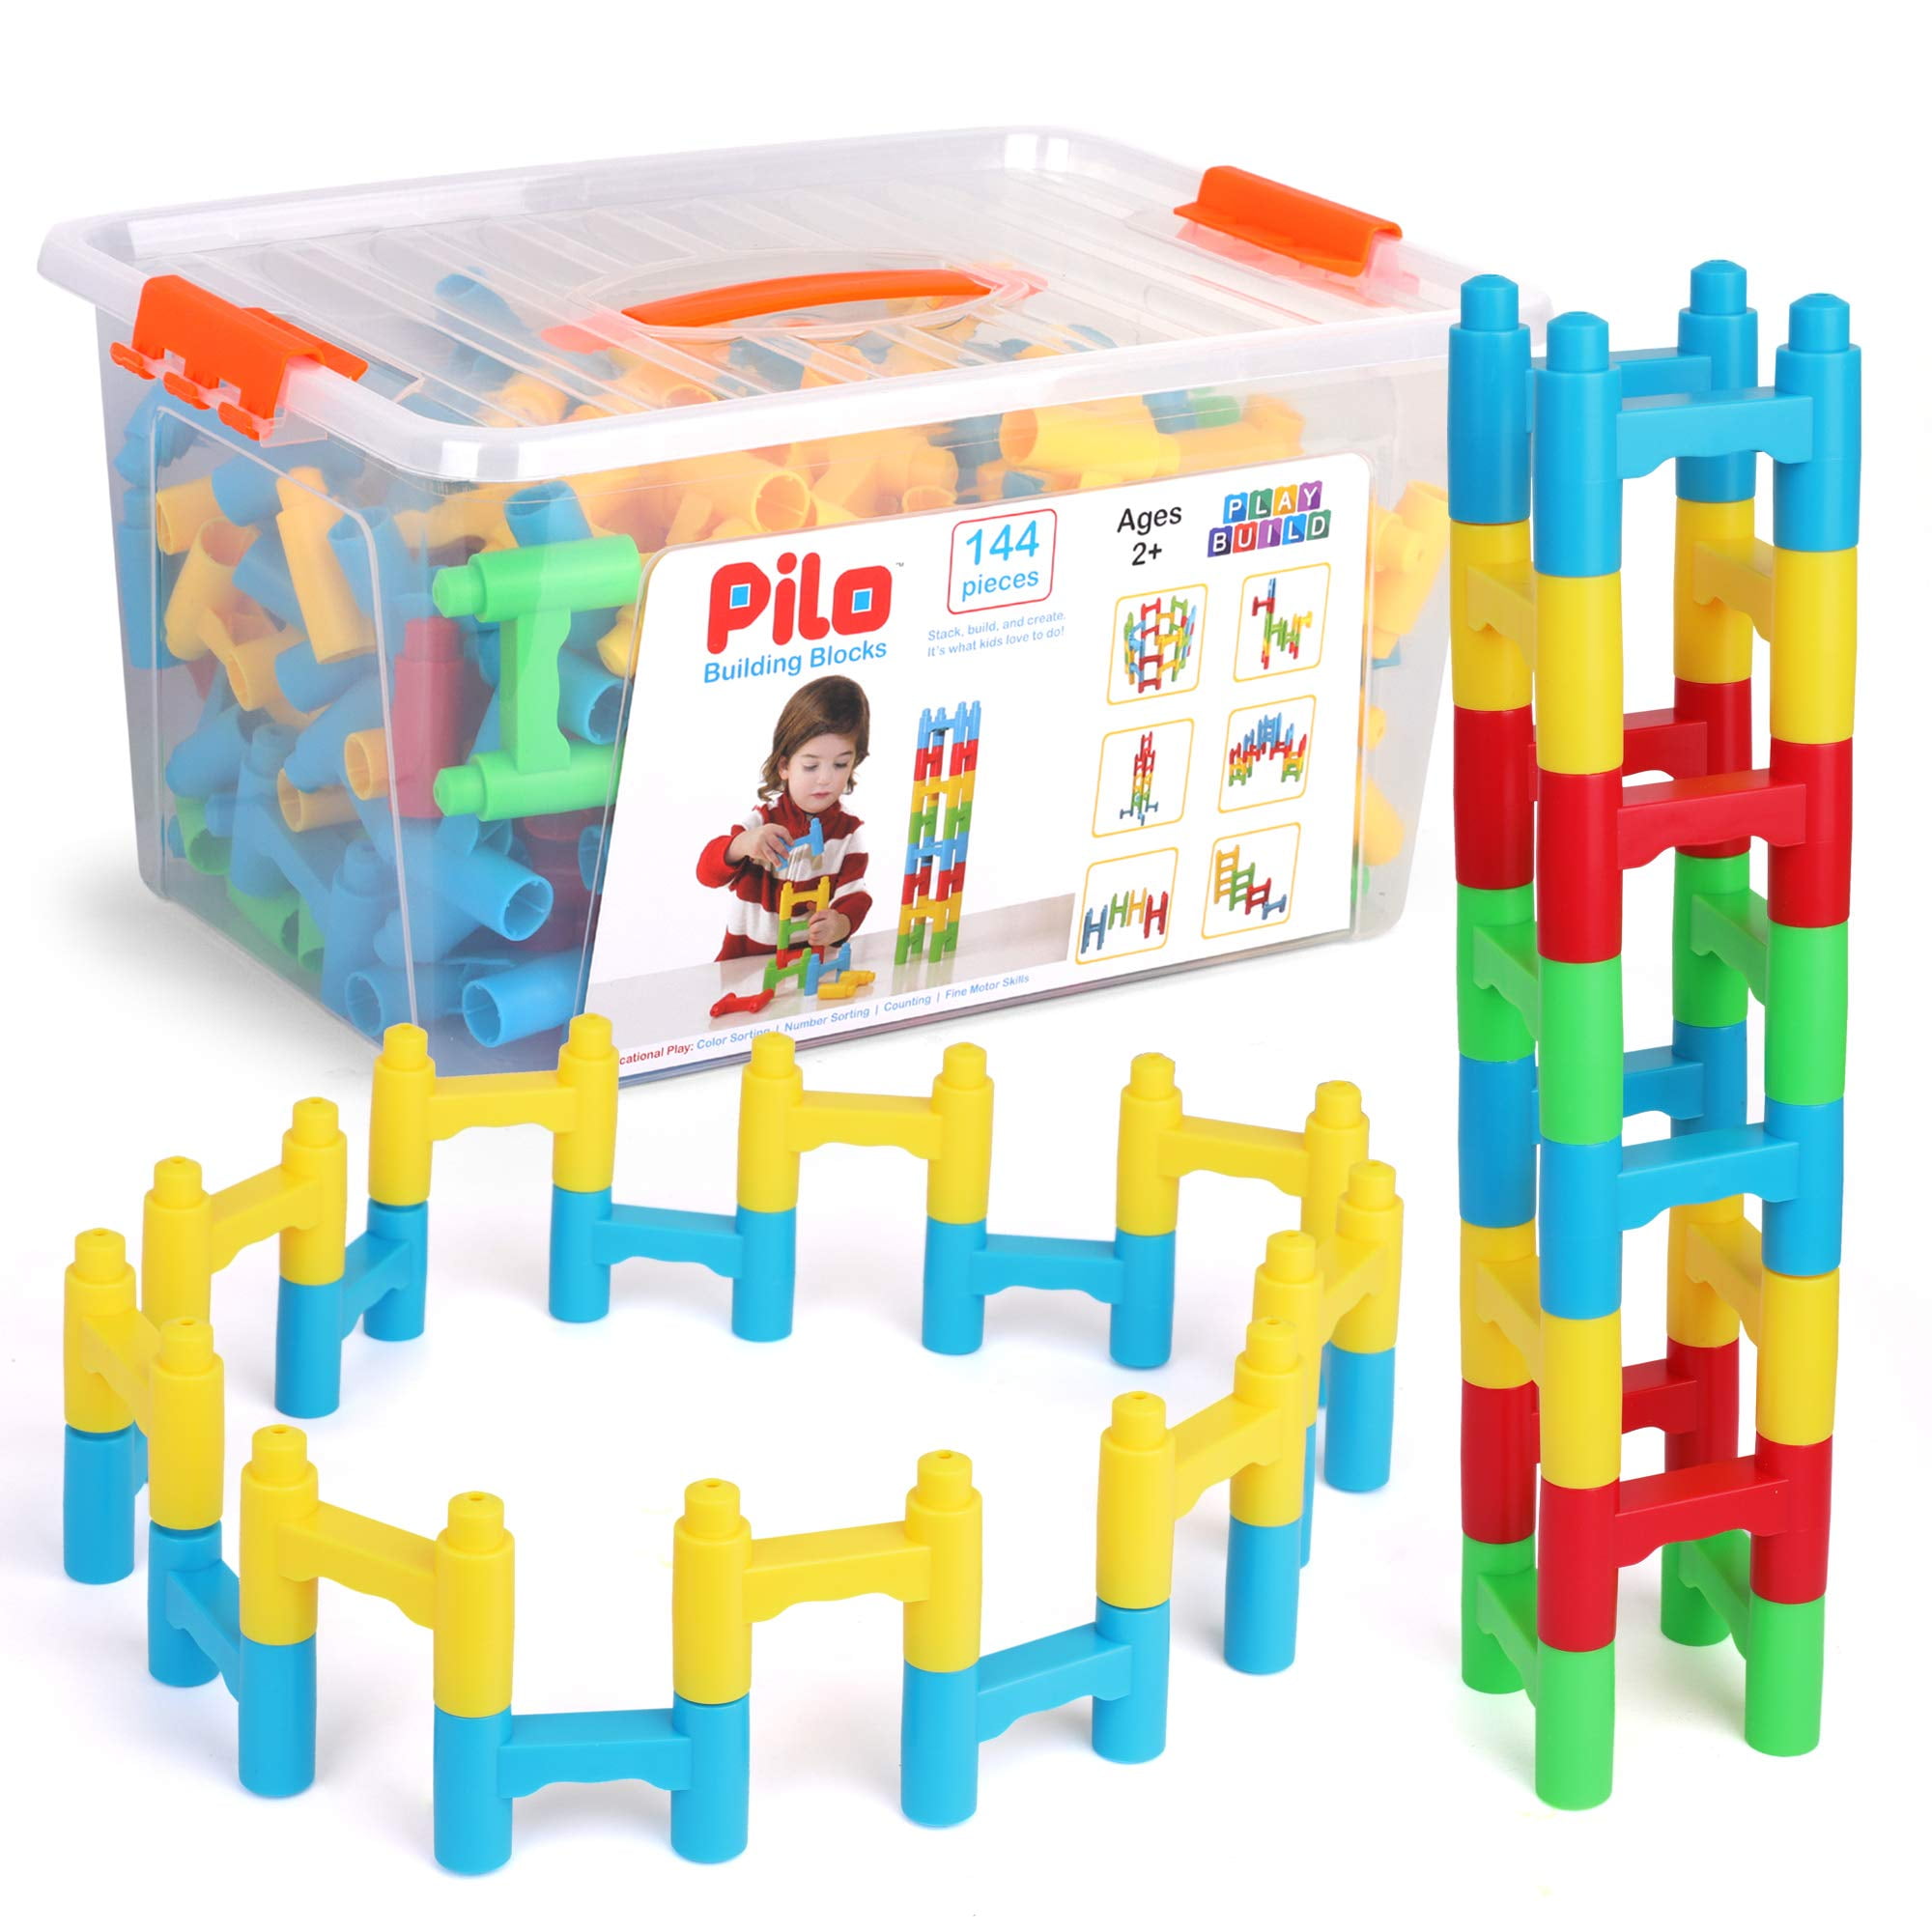 Kids Building Blocks STEM Toys, 100 Pcs - Educational Interlocking Toy